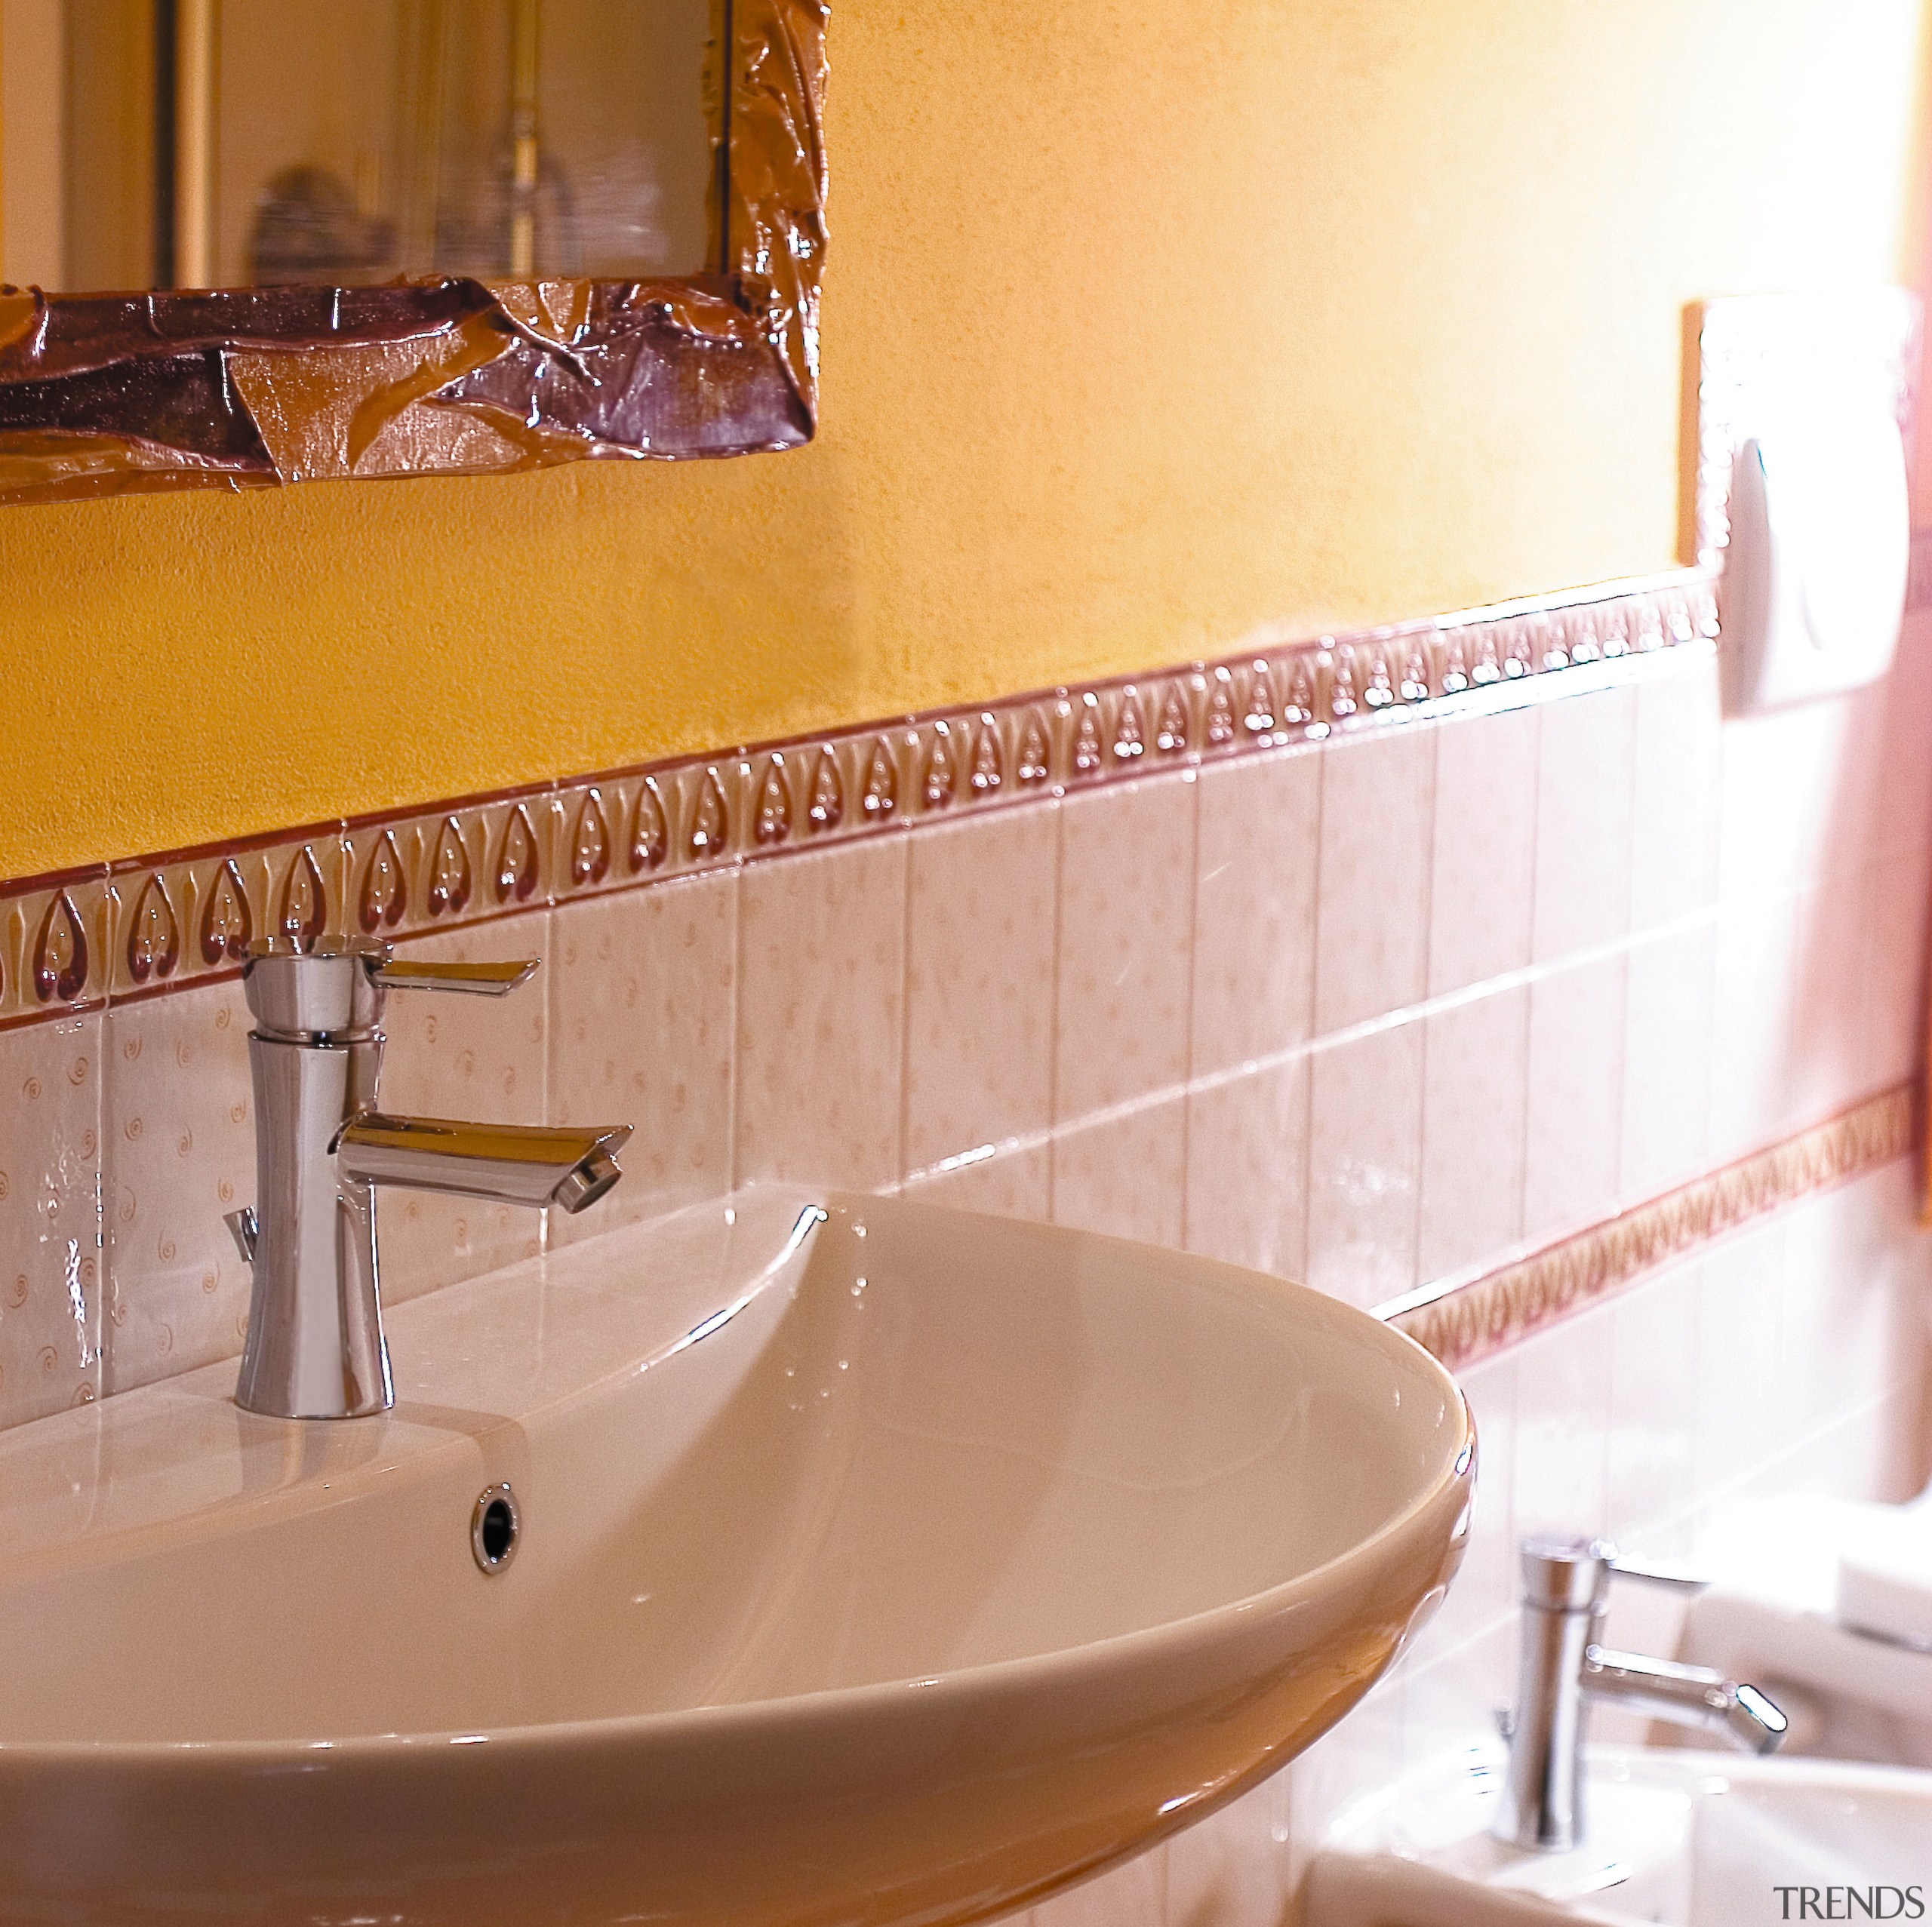 A view of some bathroomware by Rubinetteria La bathroom, ceramic, countertop, floor, flooring, interior design, plumbing fixture, property, room, sink, tap, tile, wall, orange, white